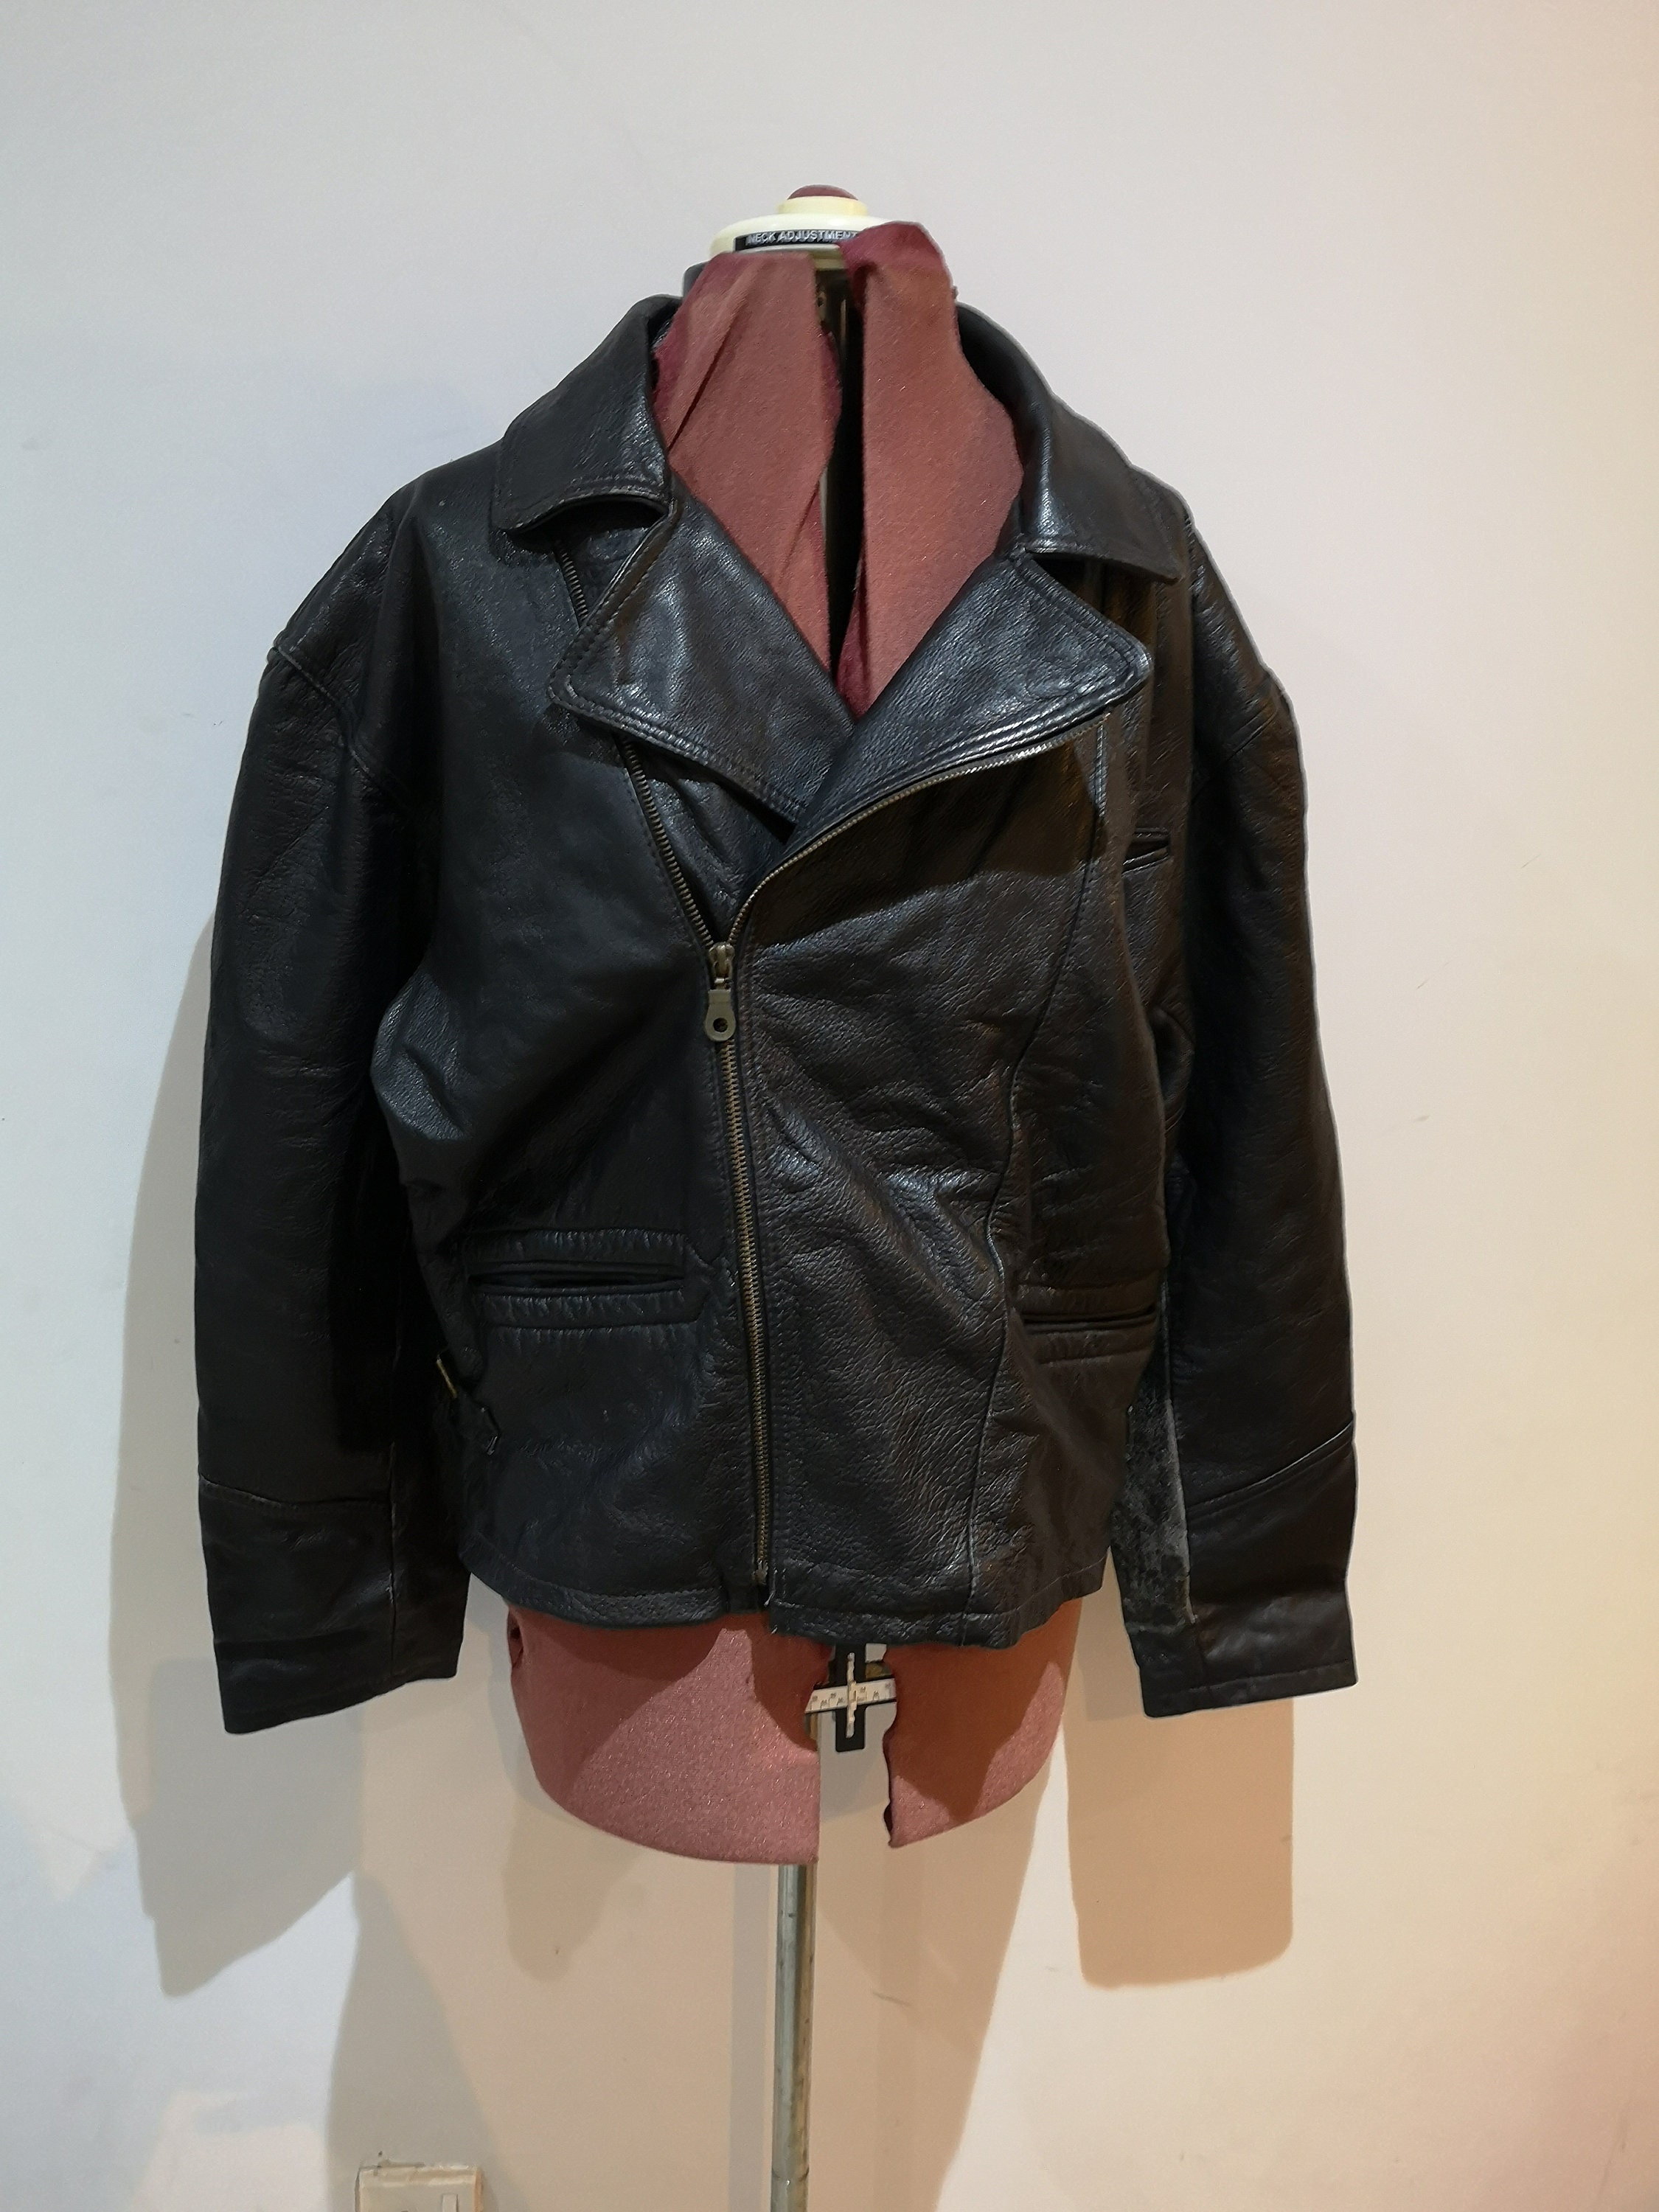 Reclaimed Vintage Leather Biker Jacket With Printed Sleeves at